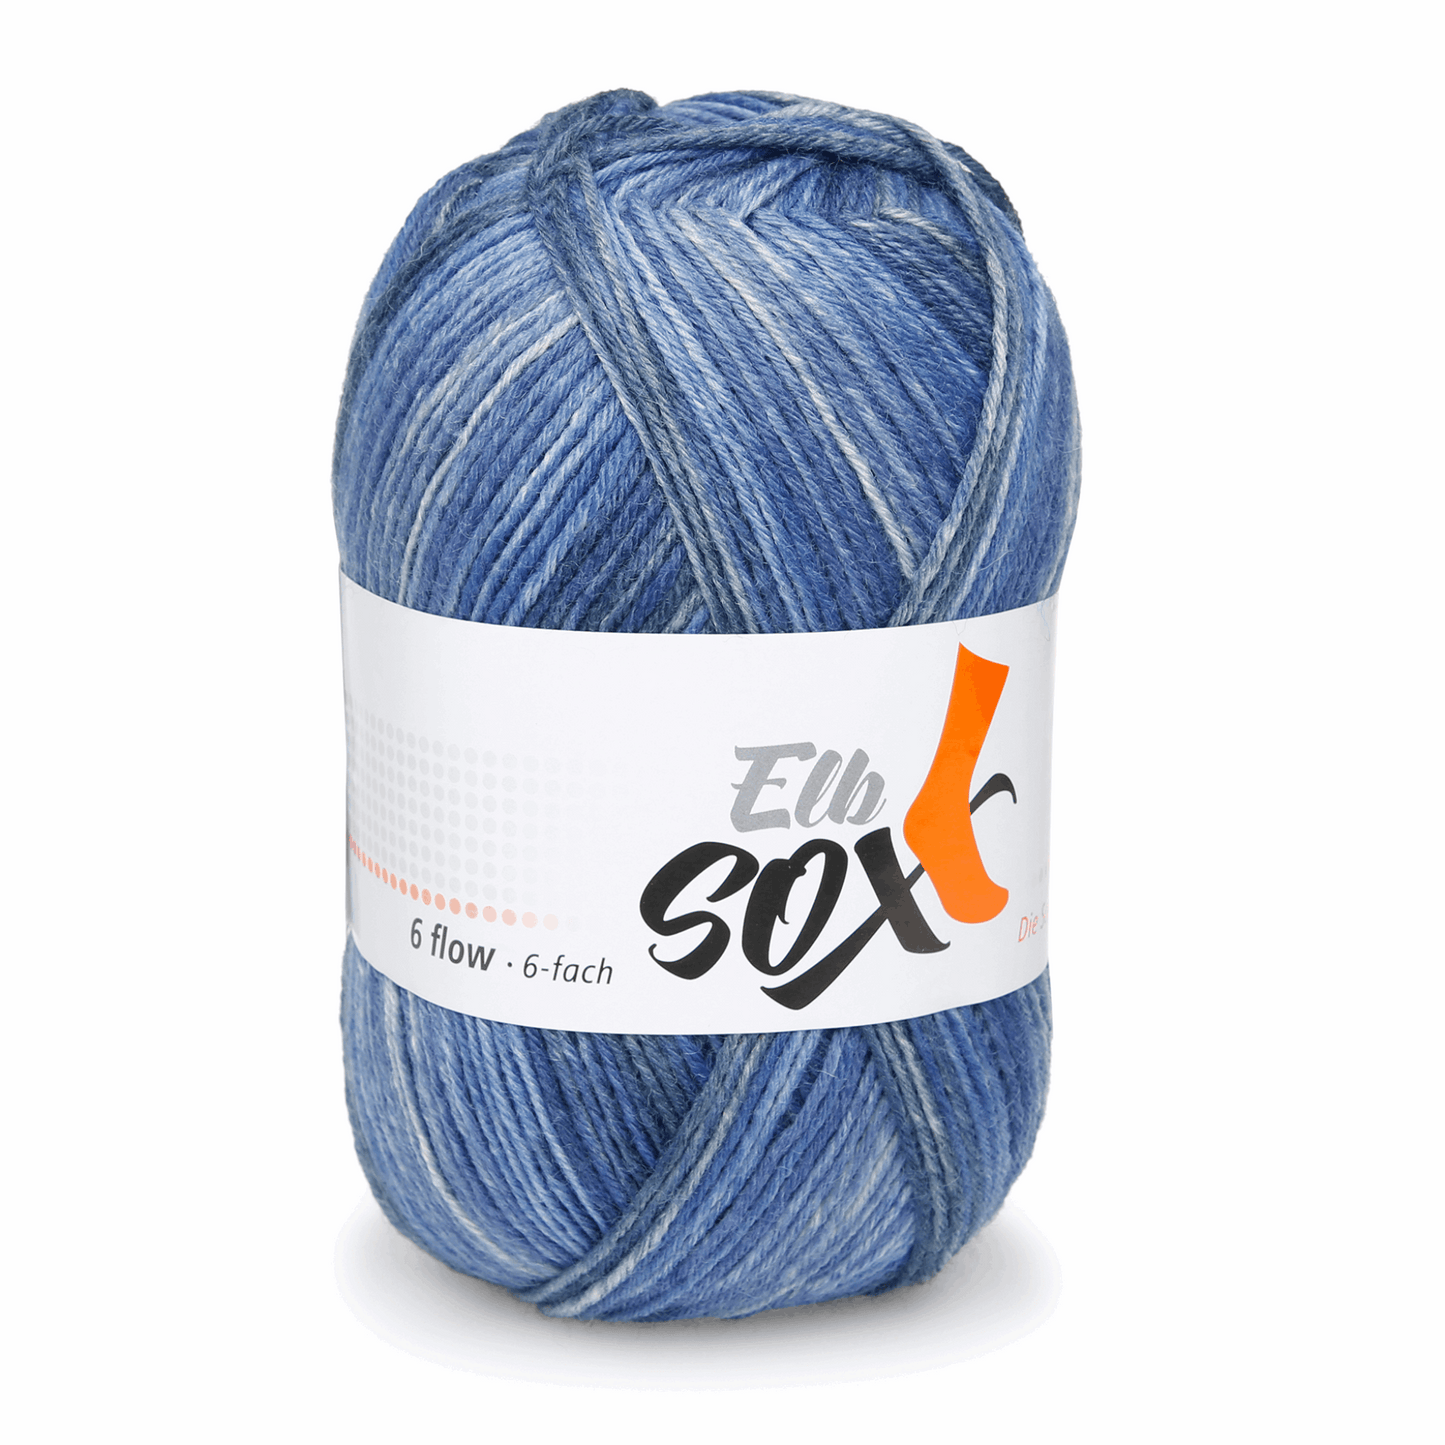 ggh ElbSox-6,  flow-color, 150g, 96040, Farbe blau degr 4